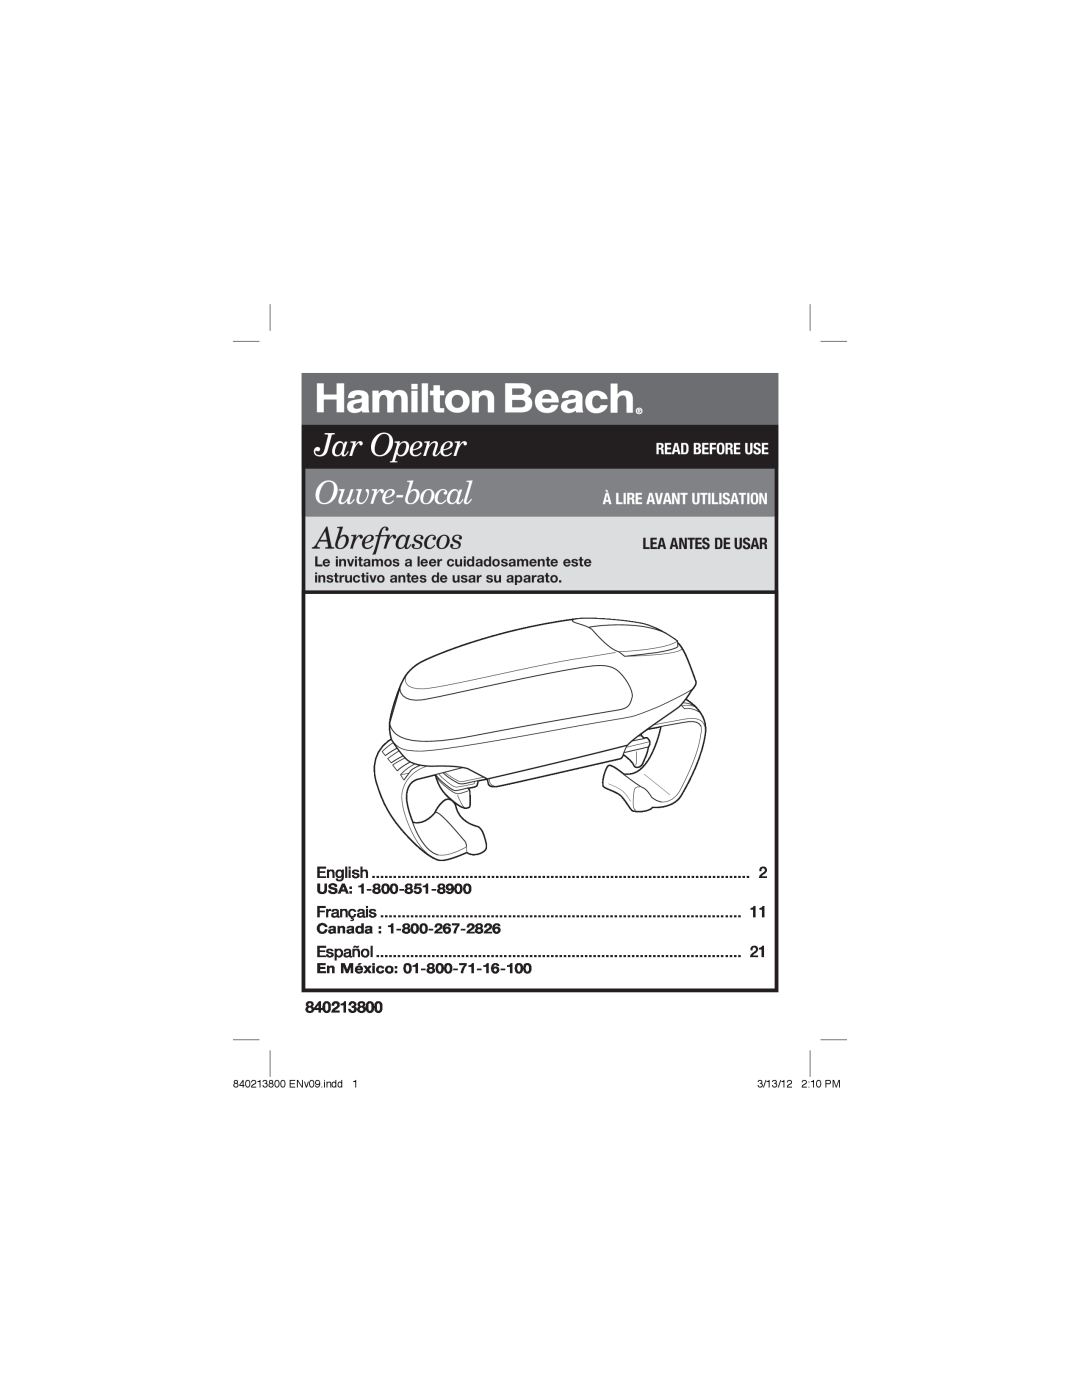 Hamilton Beach 840213800 manual Jar Opener, Ouvre-bocal, Abrefrascos, Read Before Use, Àlire Avant Utilisation, English 